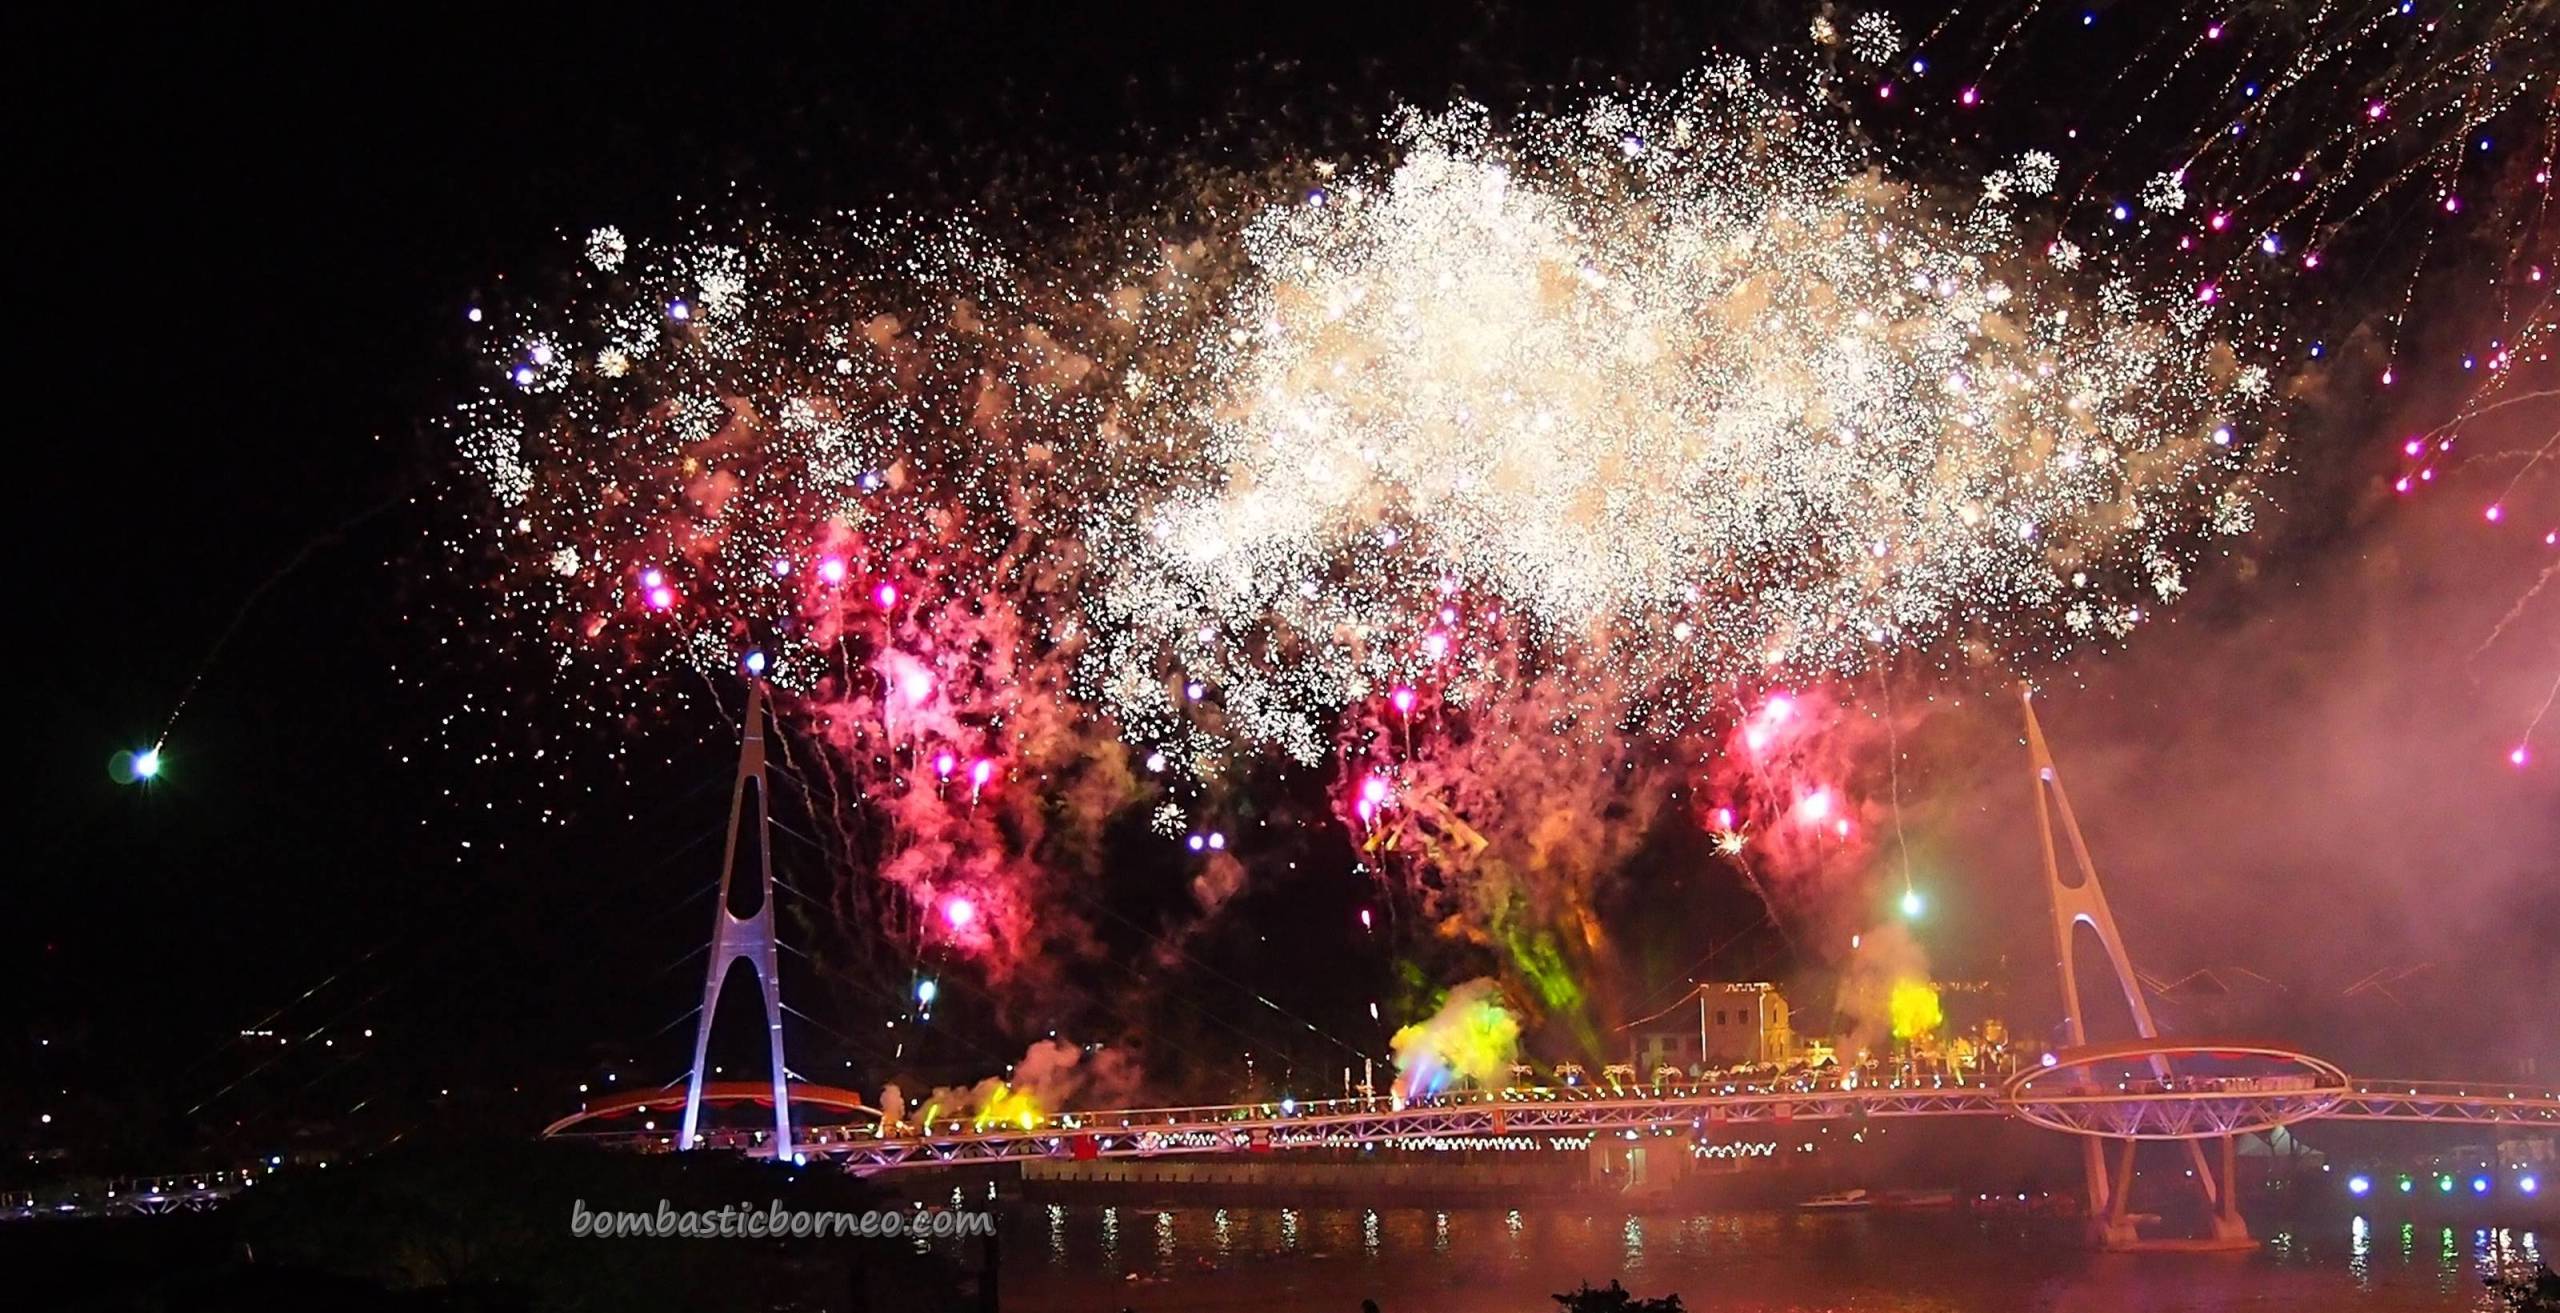 Darul Hana pedestrian bridge, jembatan, event, fireworks, Waterfront, Borneo, Malaysia, Obyek wisata, tourist attraction, travel guide, 古晋, 沙捞越, 婆罗州, 步行桥